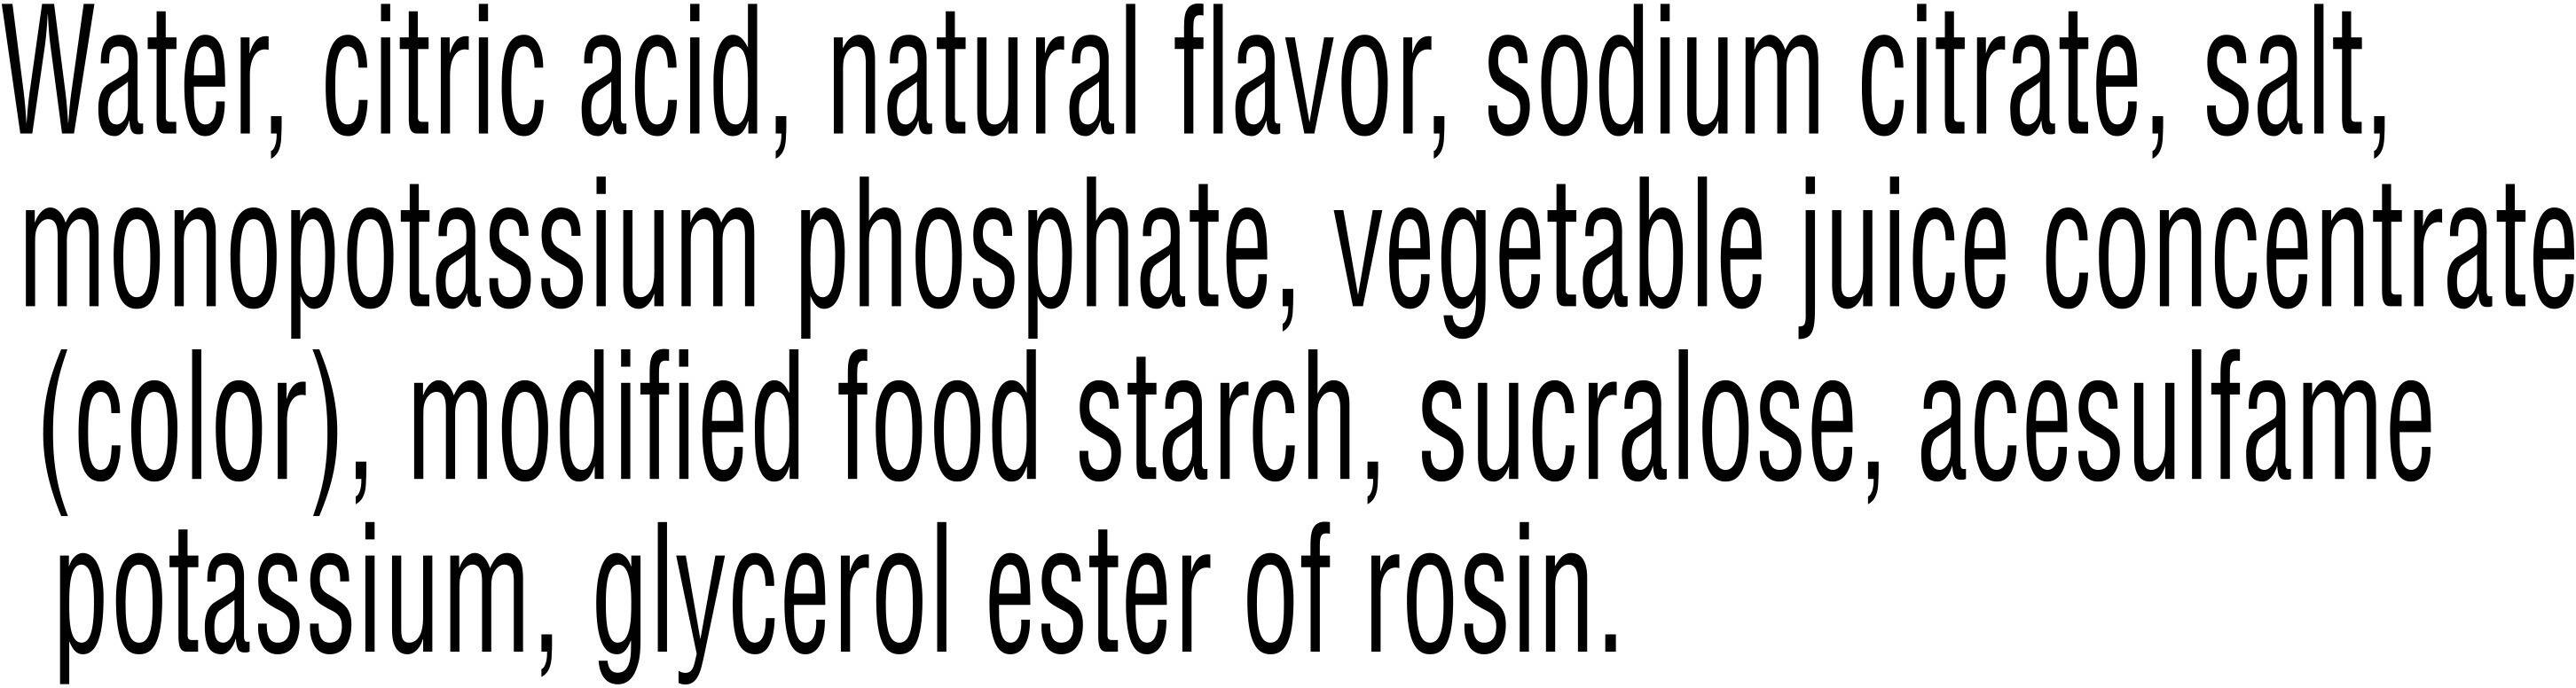 Image describing nutrition information for product Gatorade Zero Berry